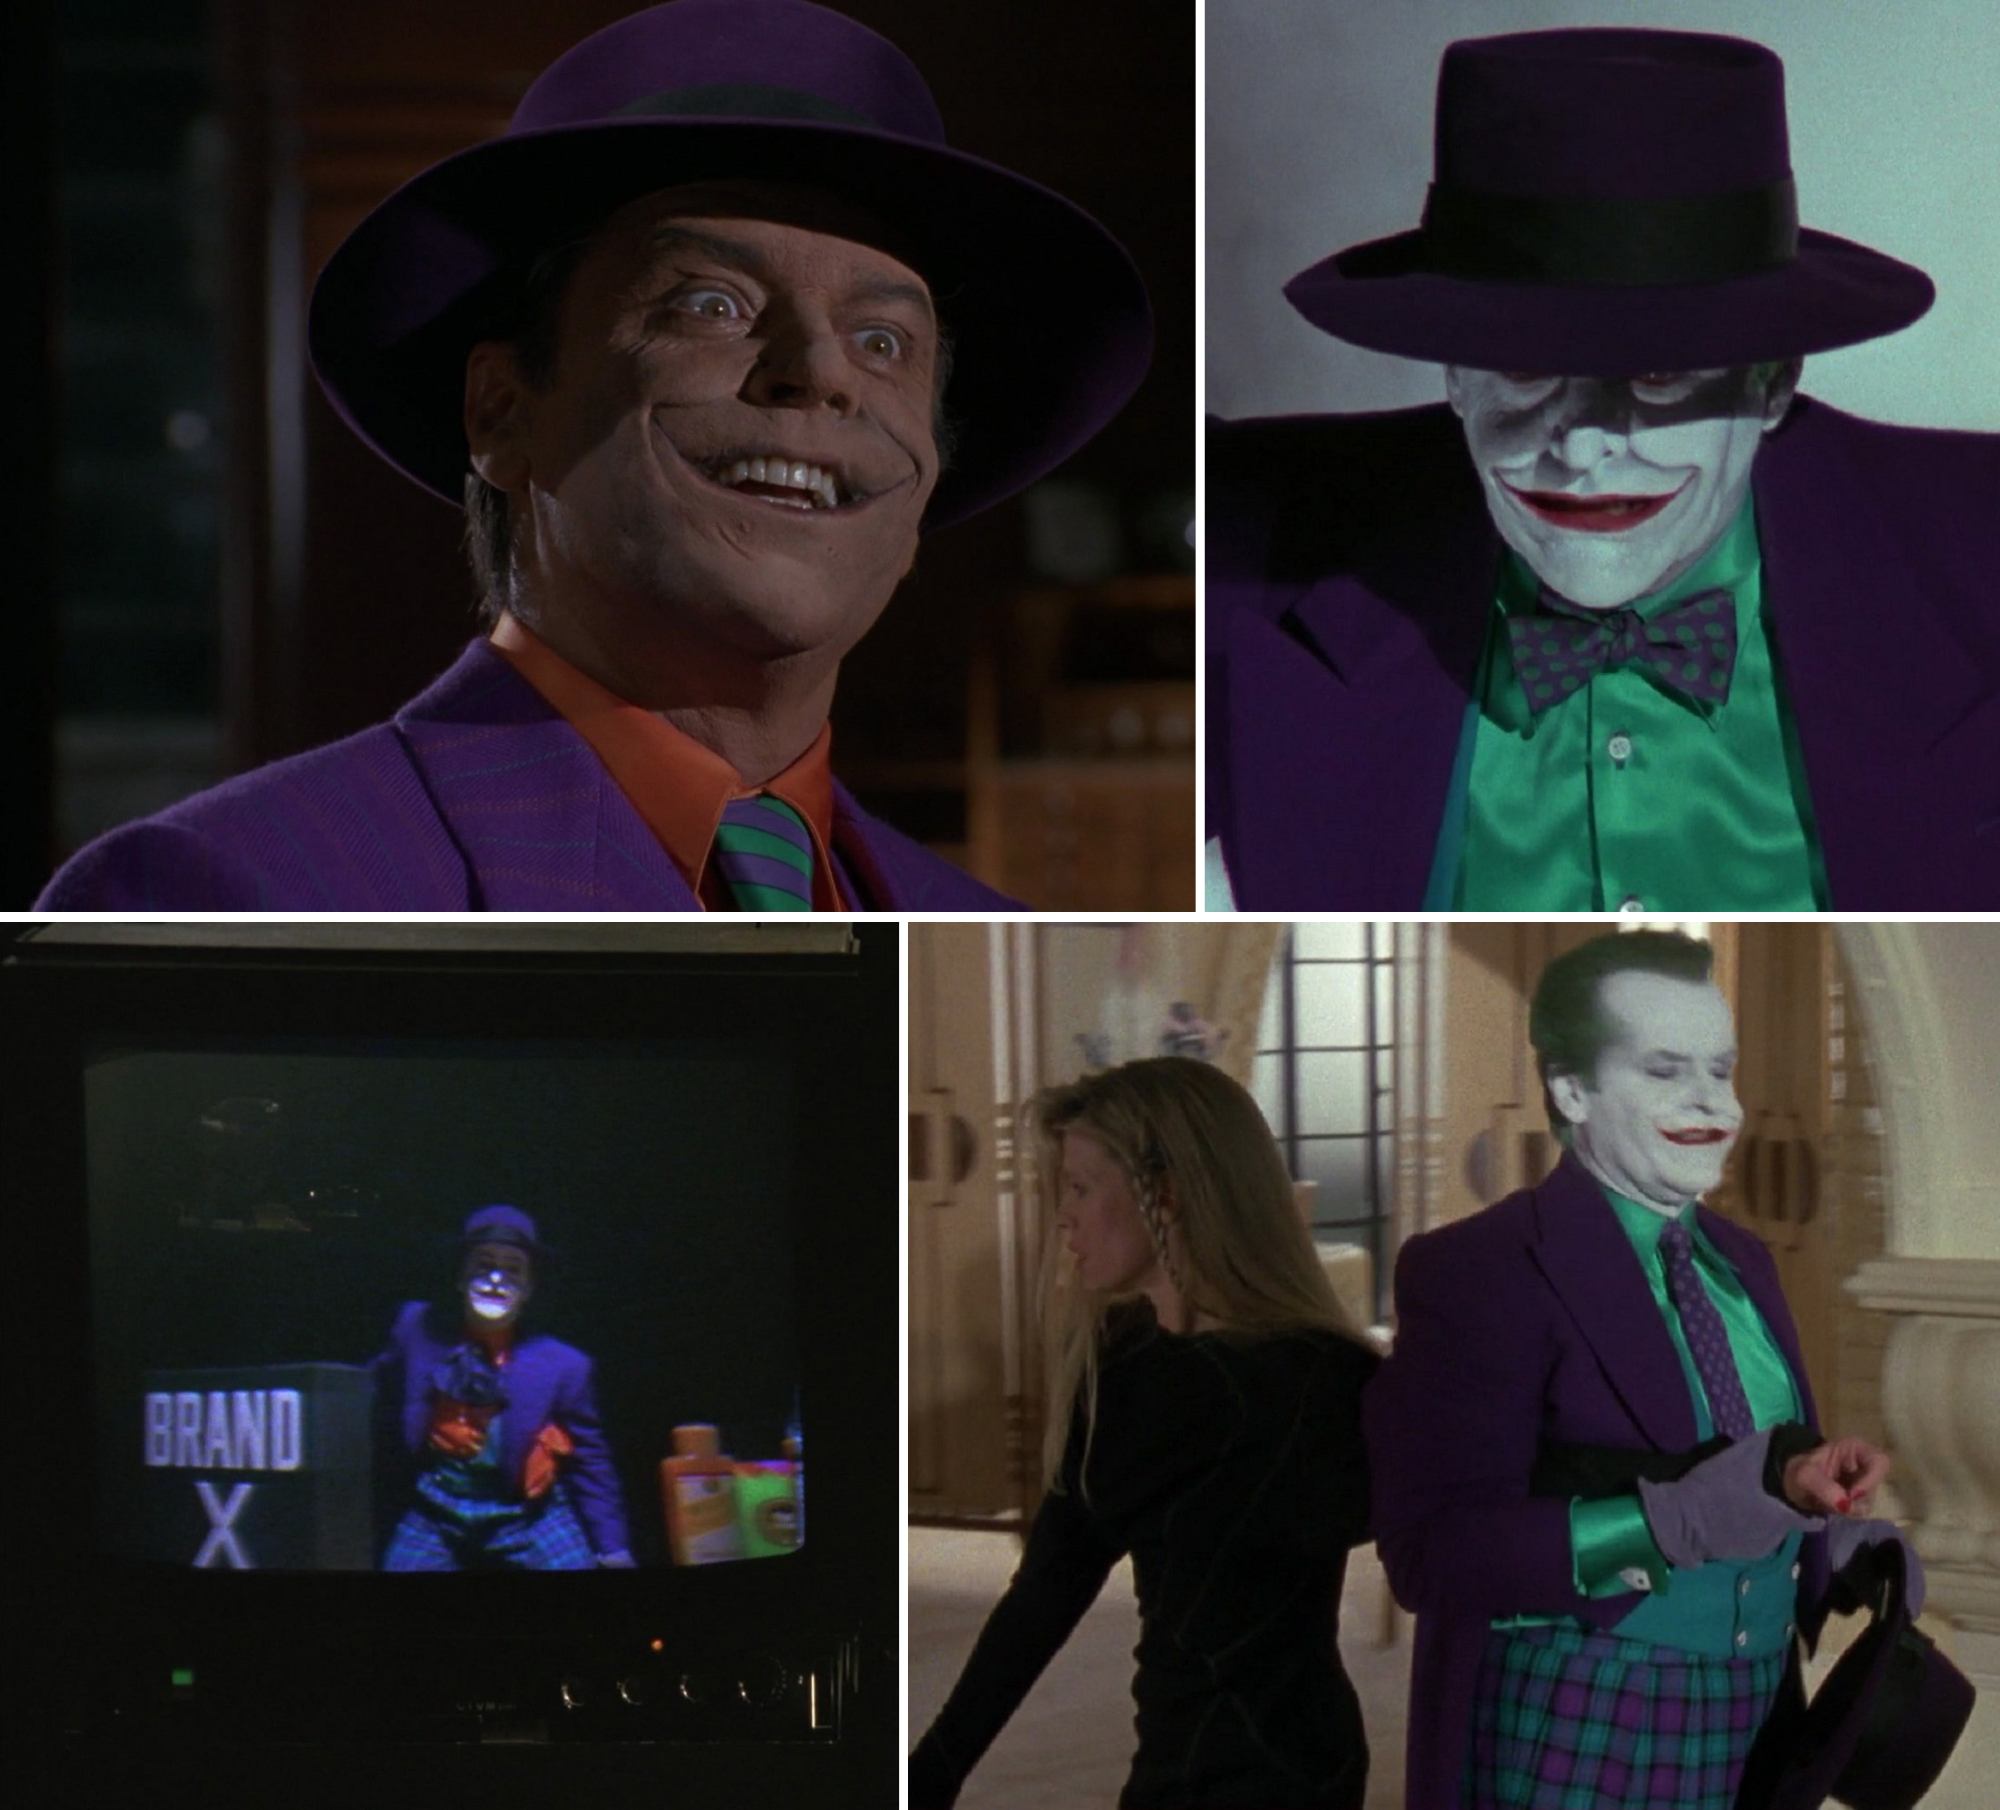 Joker costume - hats